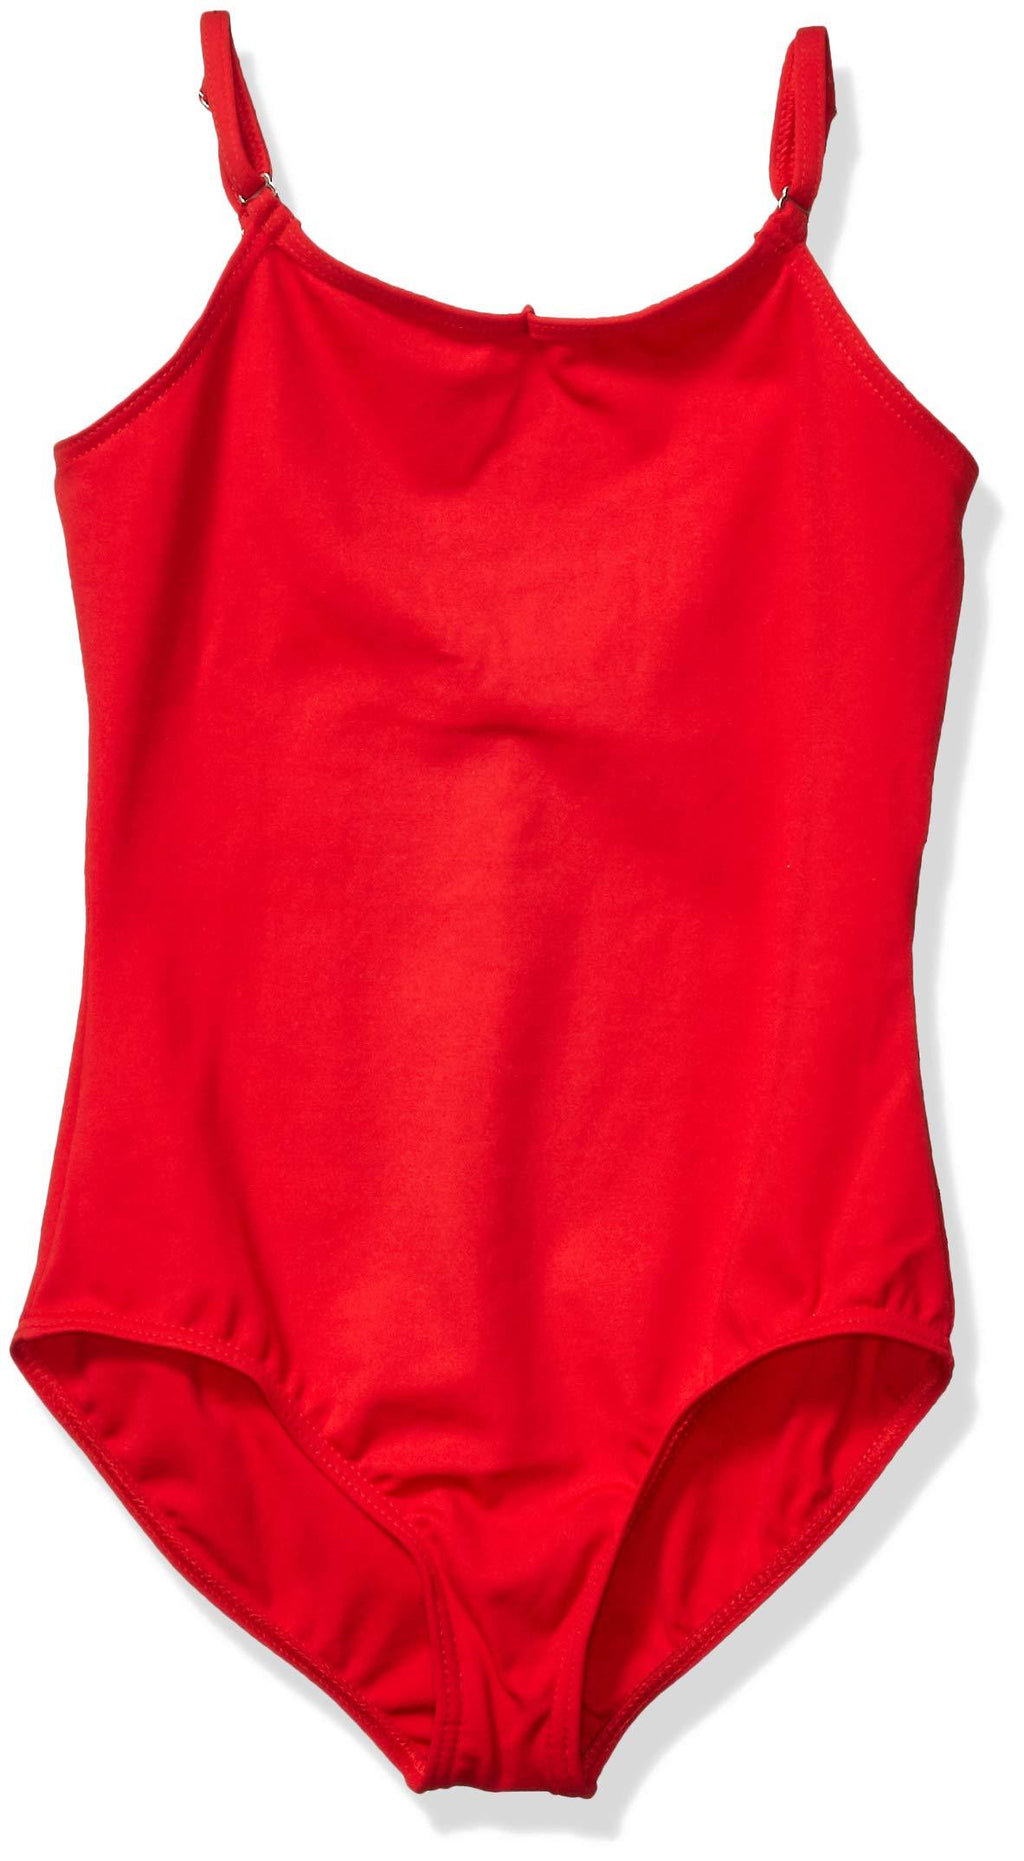 [AUSTRALIA] - Capezio Girls' Camisole Leotard W/Adjustable Straps Medium Red 